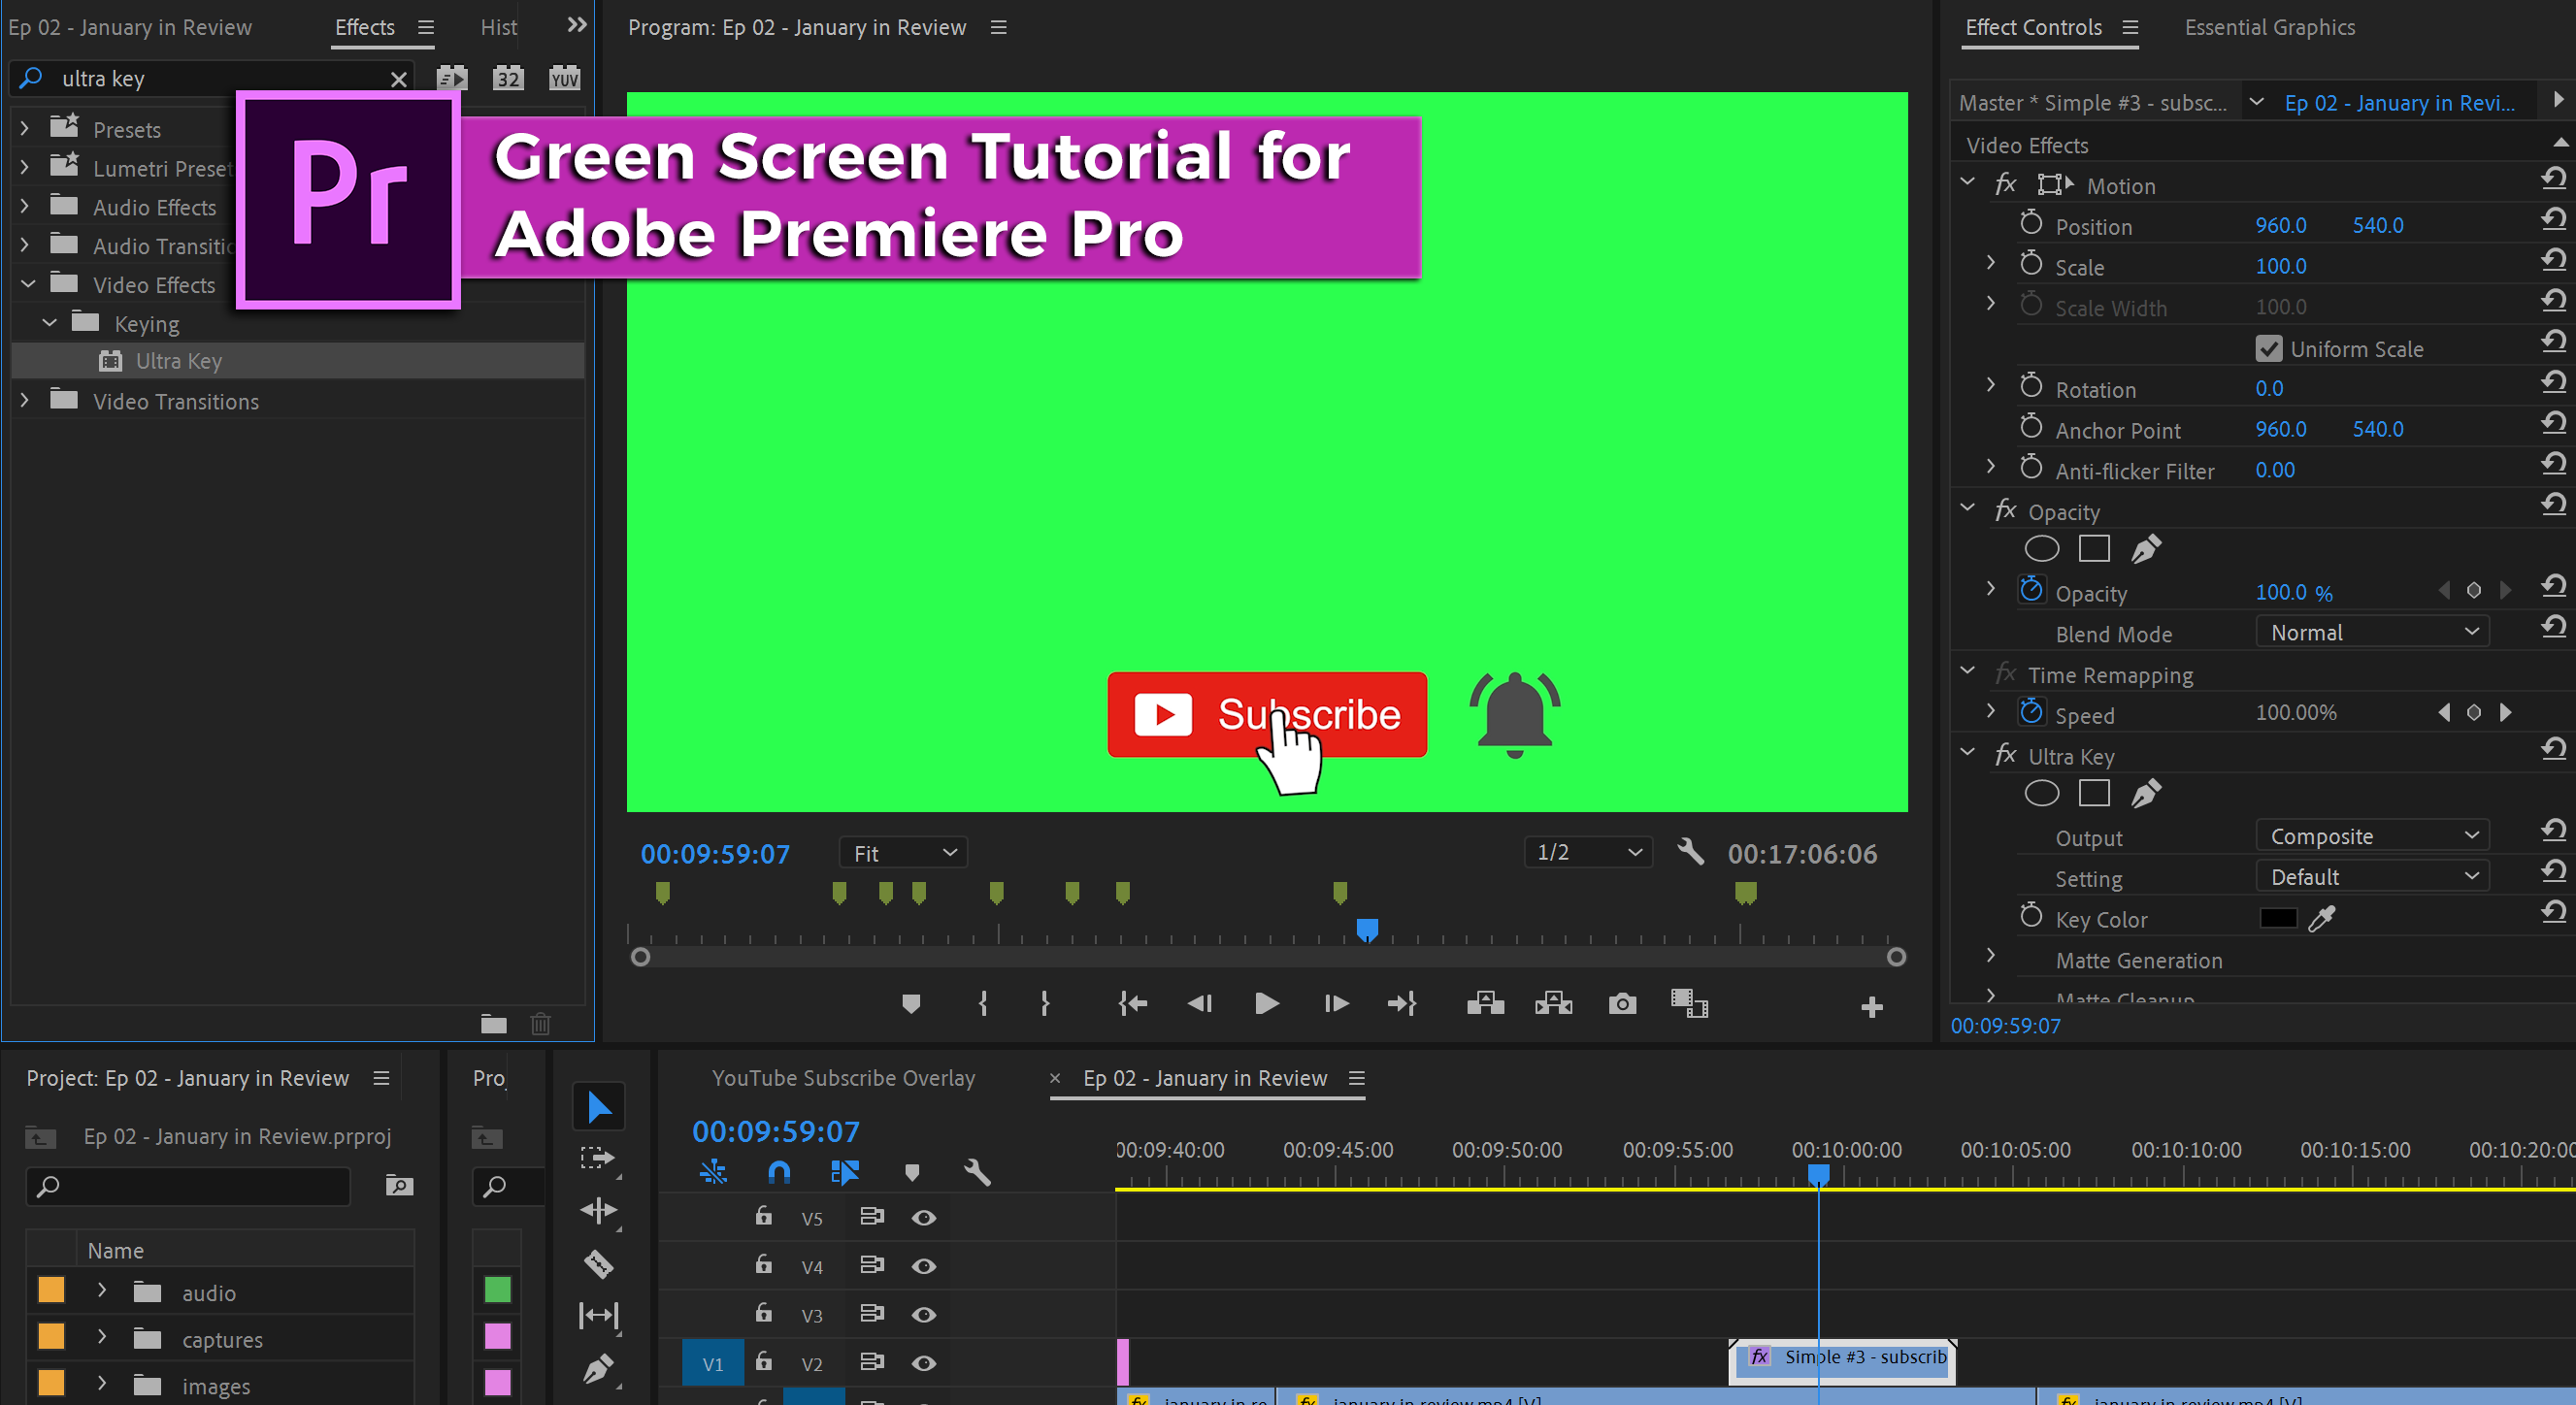 Green Screen Tutorial (aka Ultra Key effect) with Adobe Premiere Pro